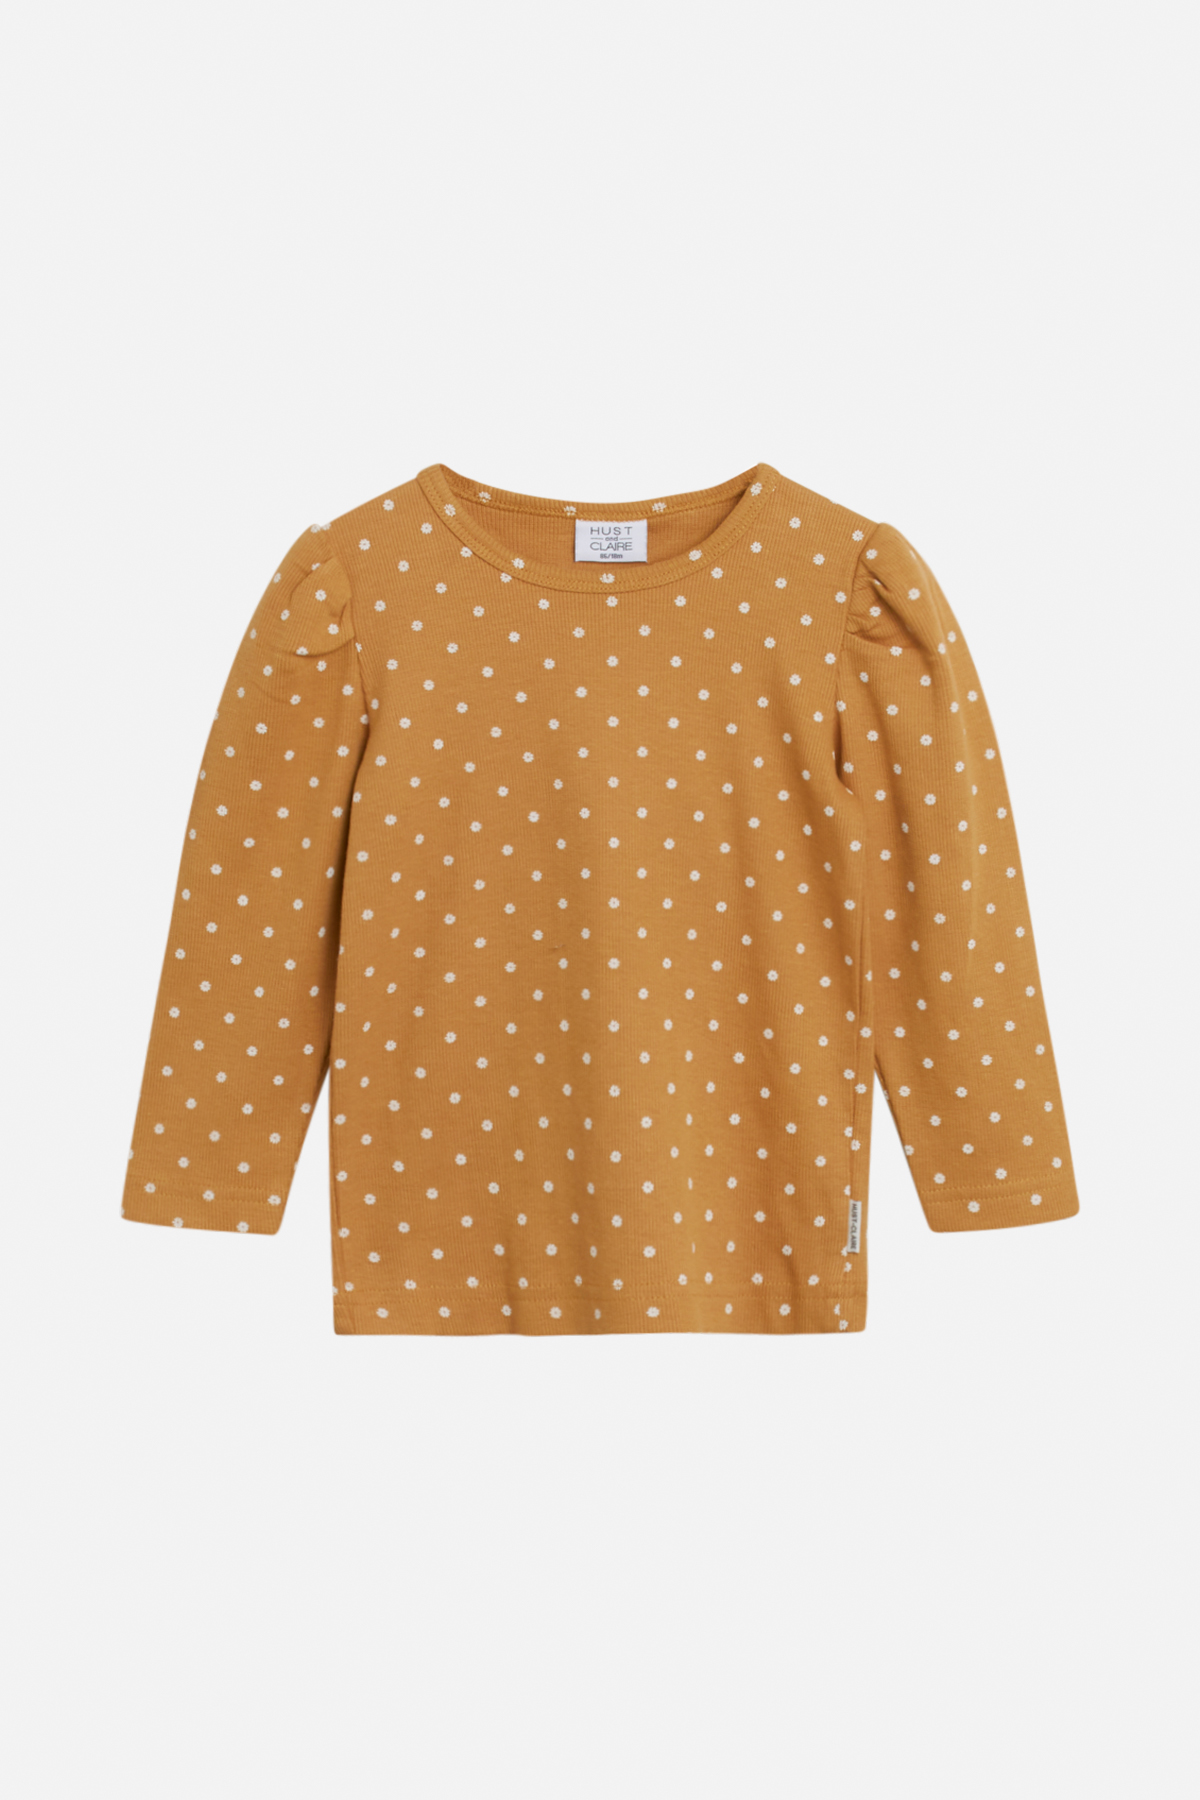  Alieen T-Shirt, Cinnamon, 98 cm